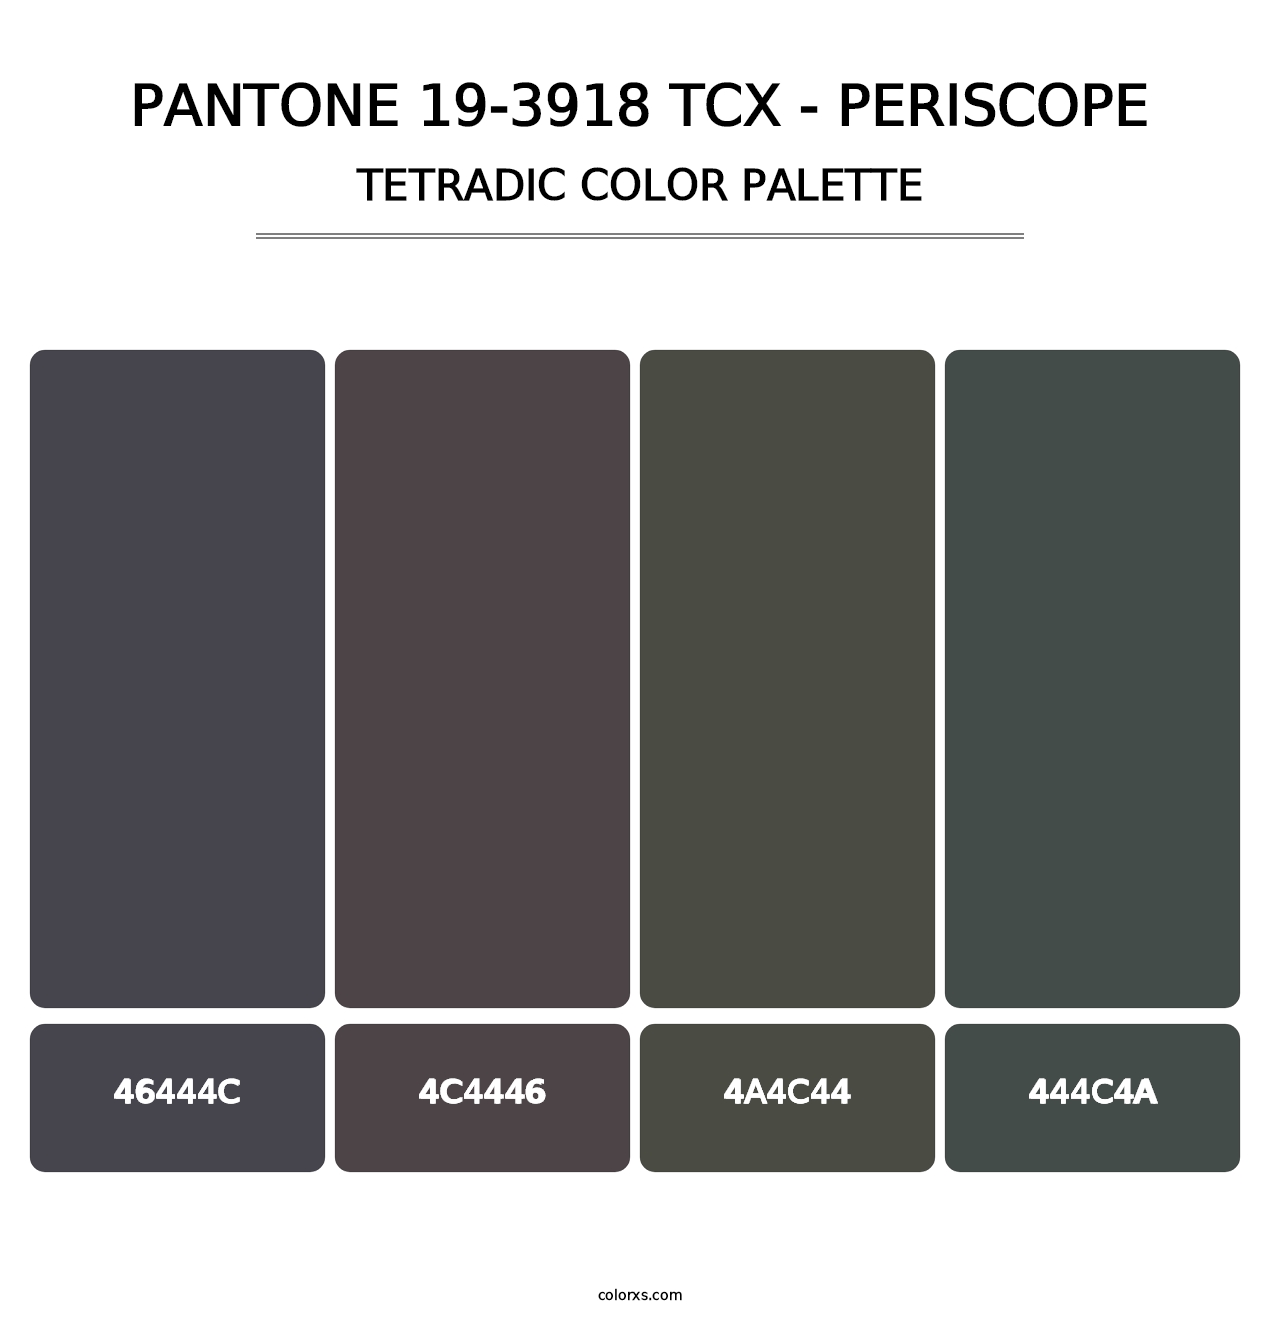 PANTONE 19-3918 TCX - Periscope - Tetradic Color Palette